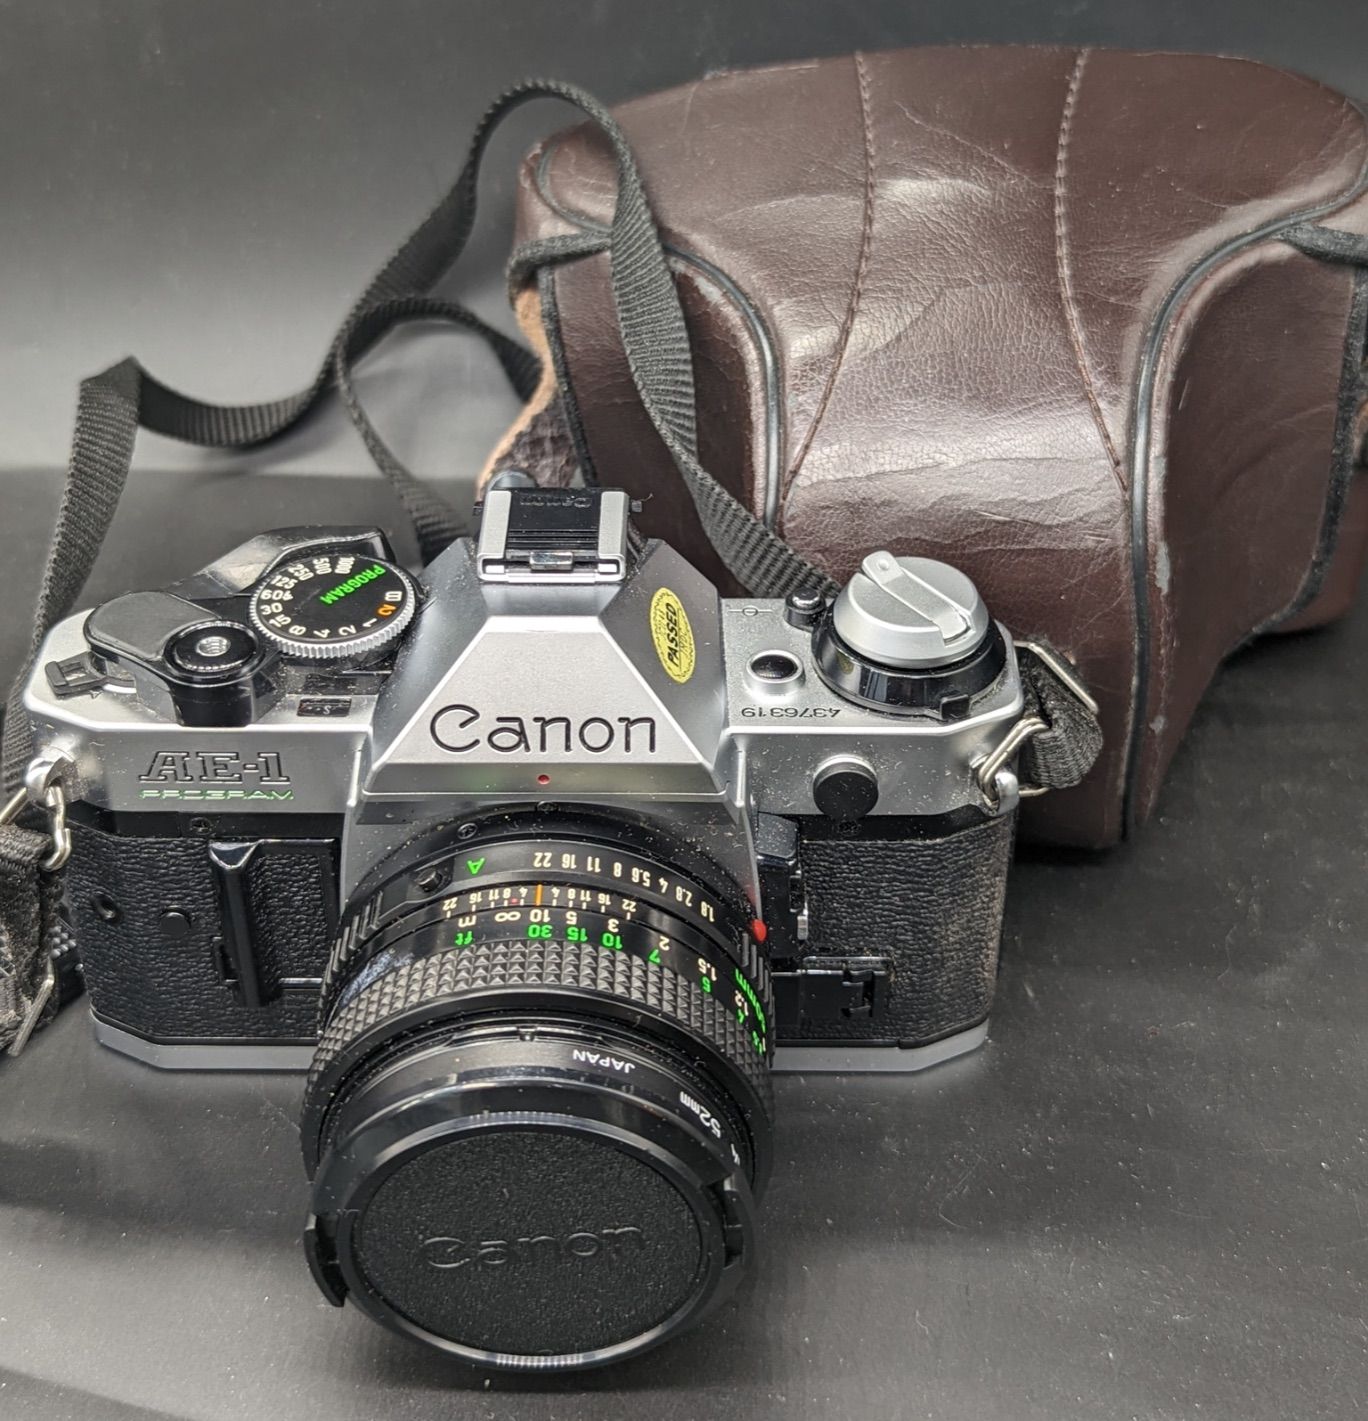 CANON Eine Canon AE-1 Kamera, 50mm Objektiv